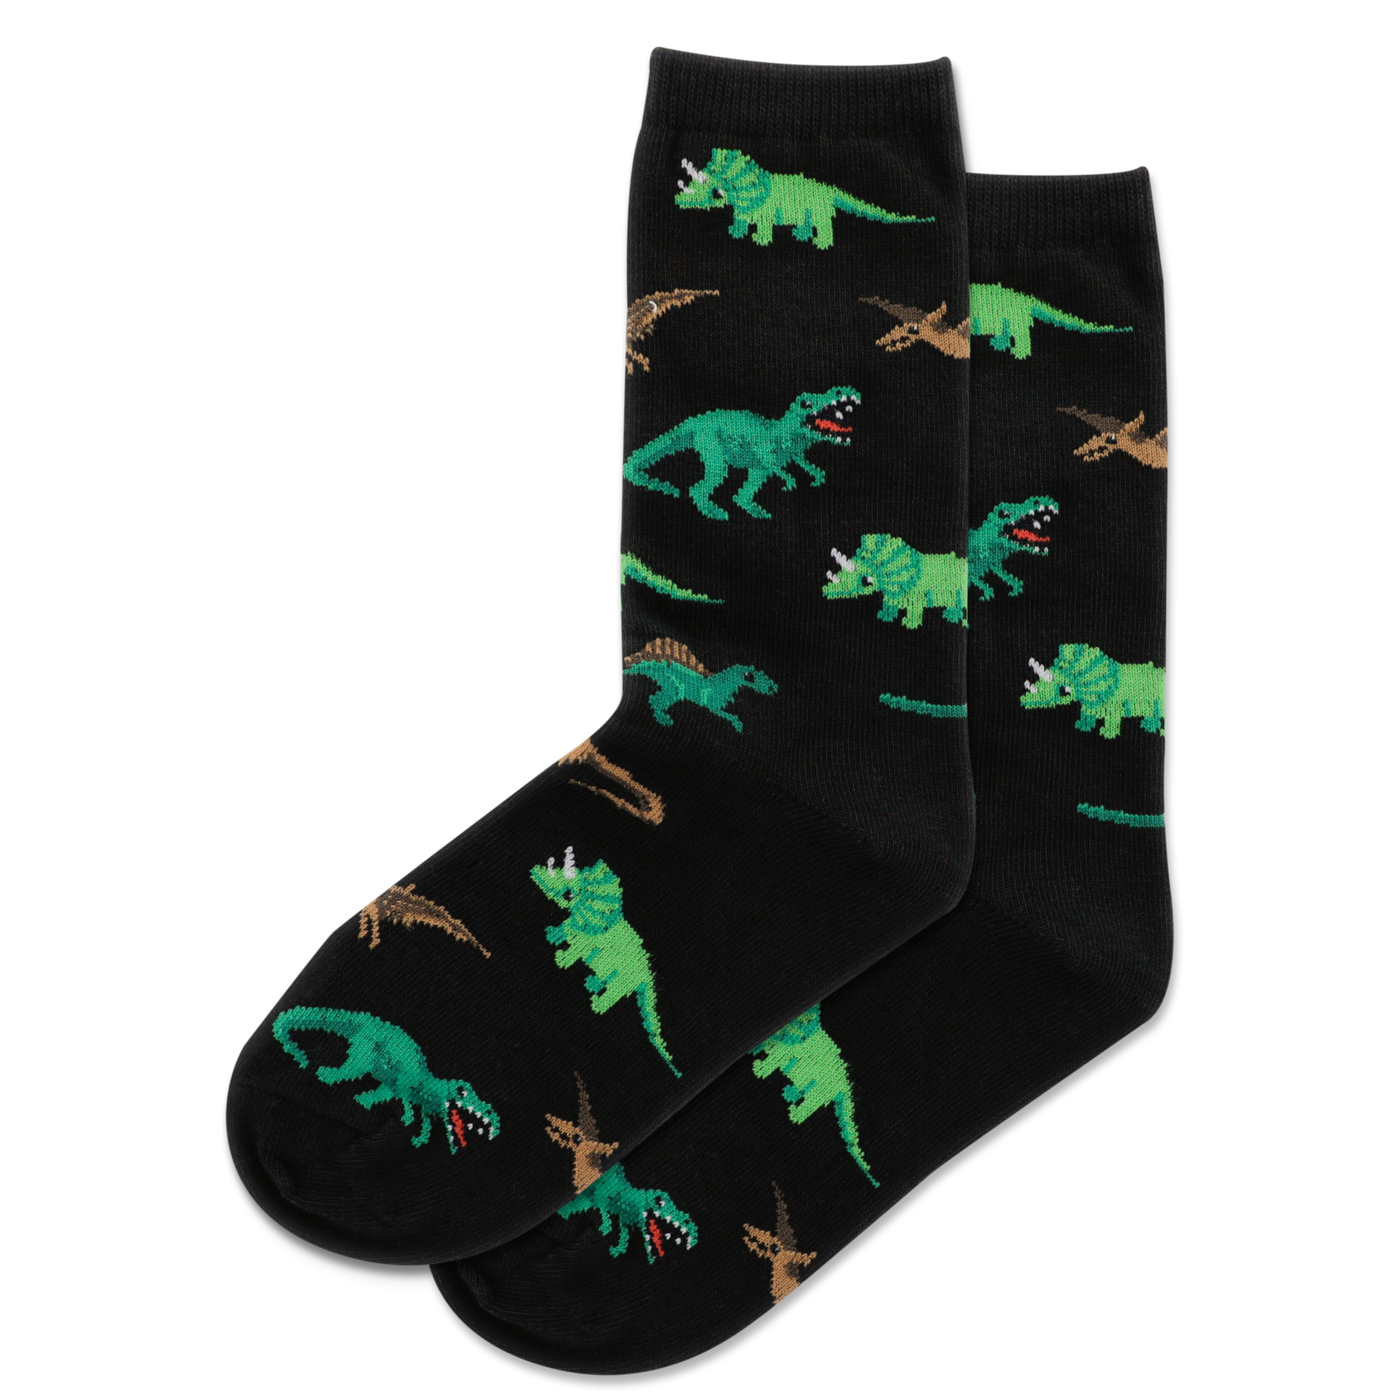 Kid's "Dinosaur" Crew Socks by Hot Sox